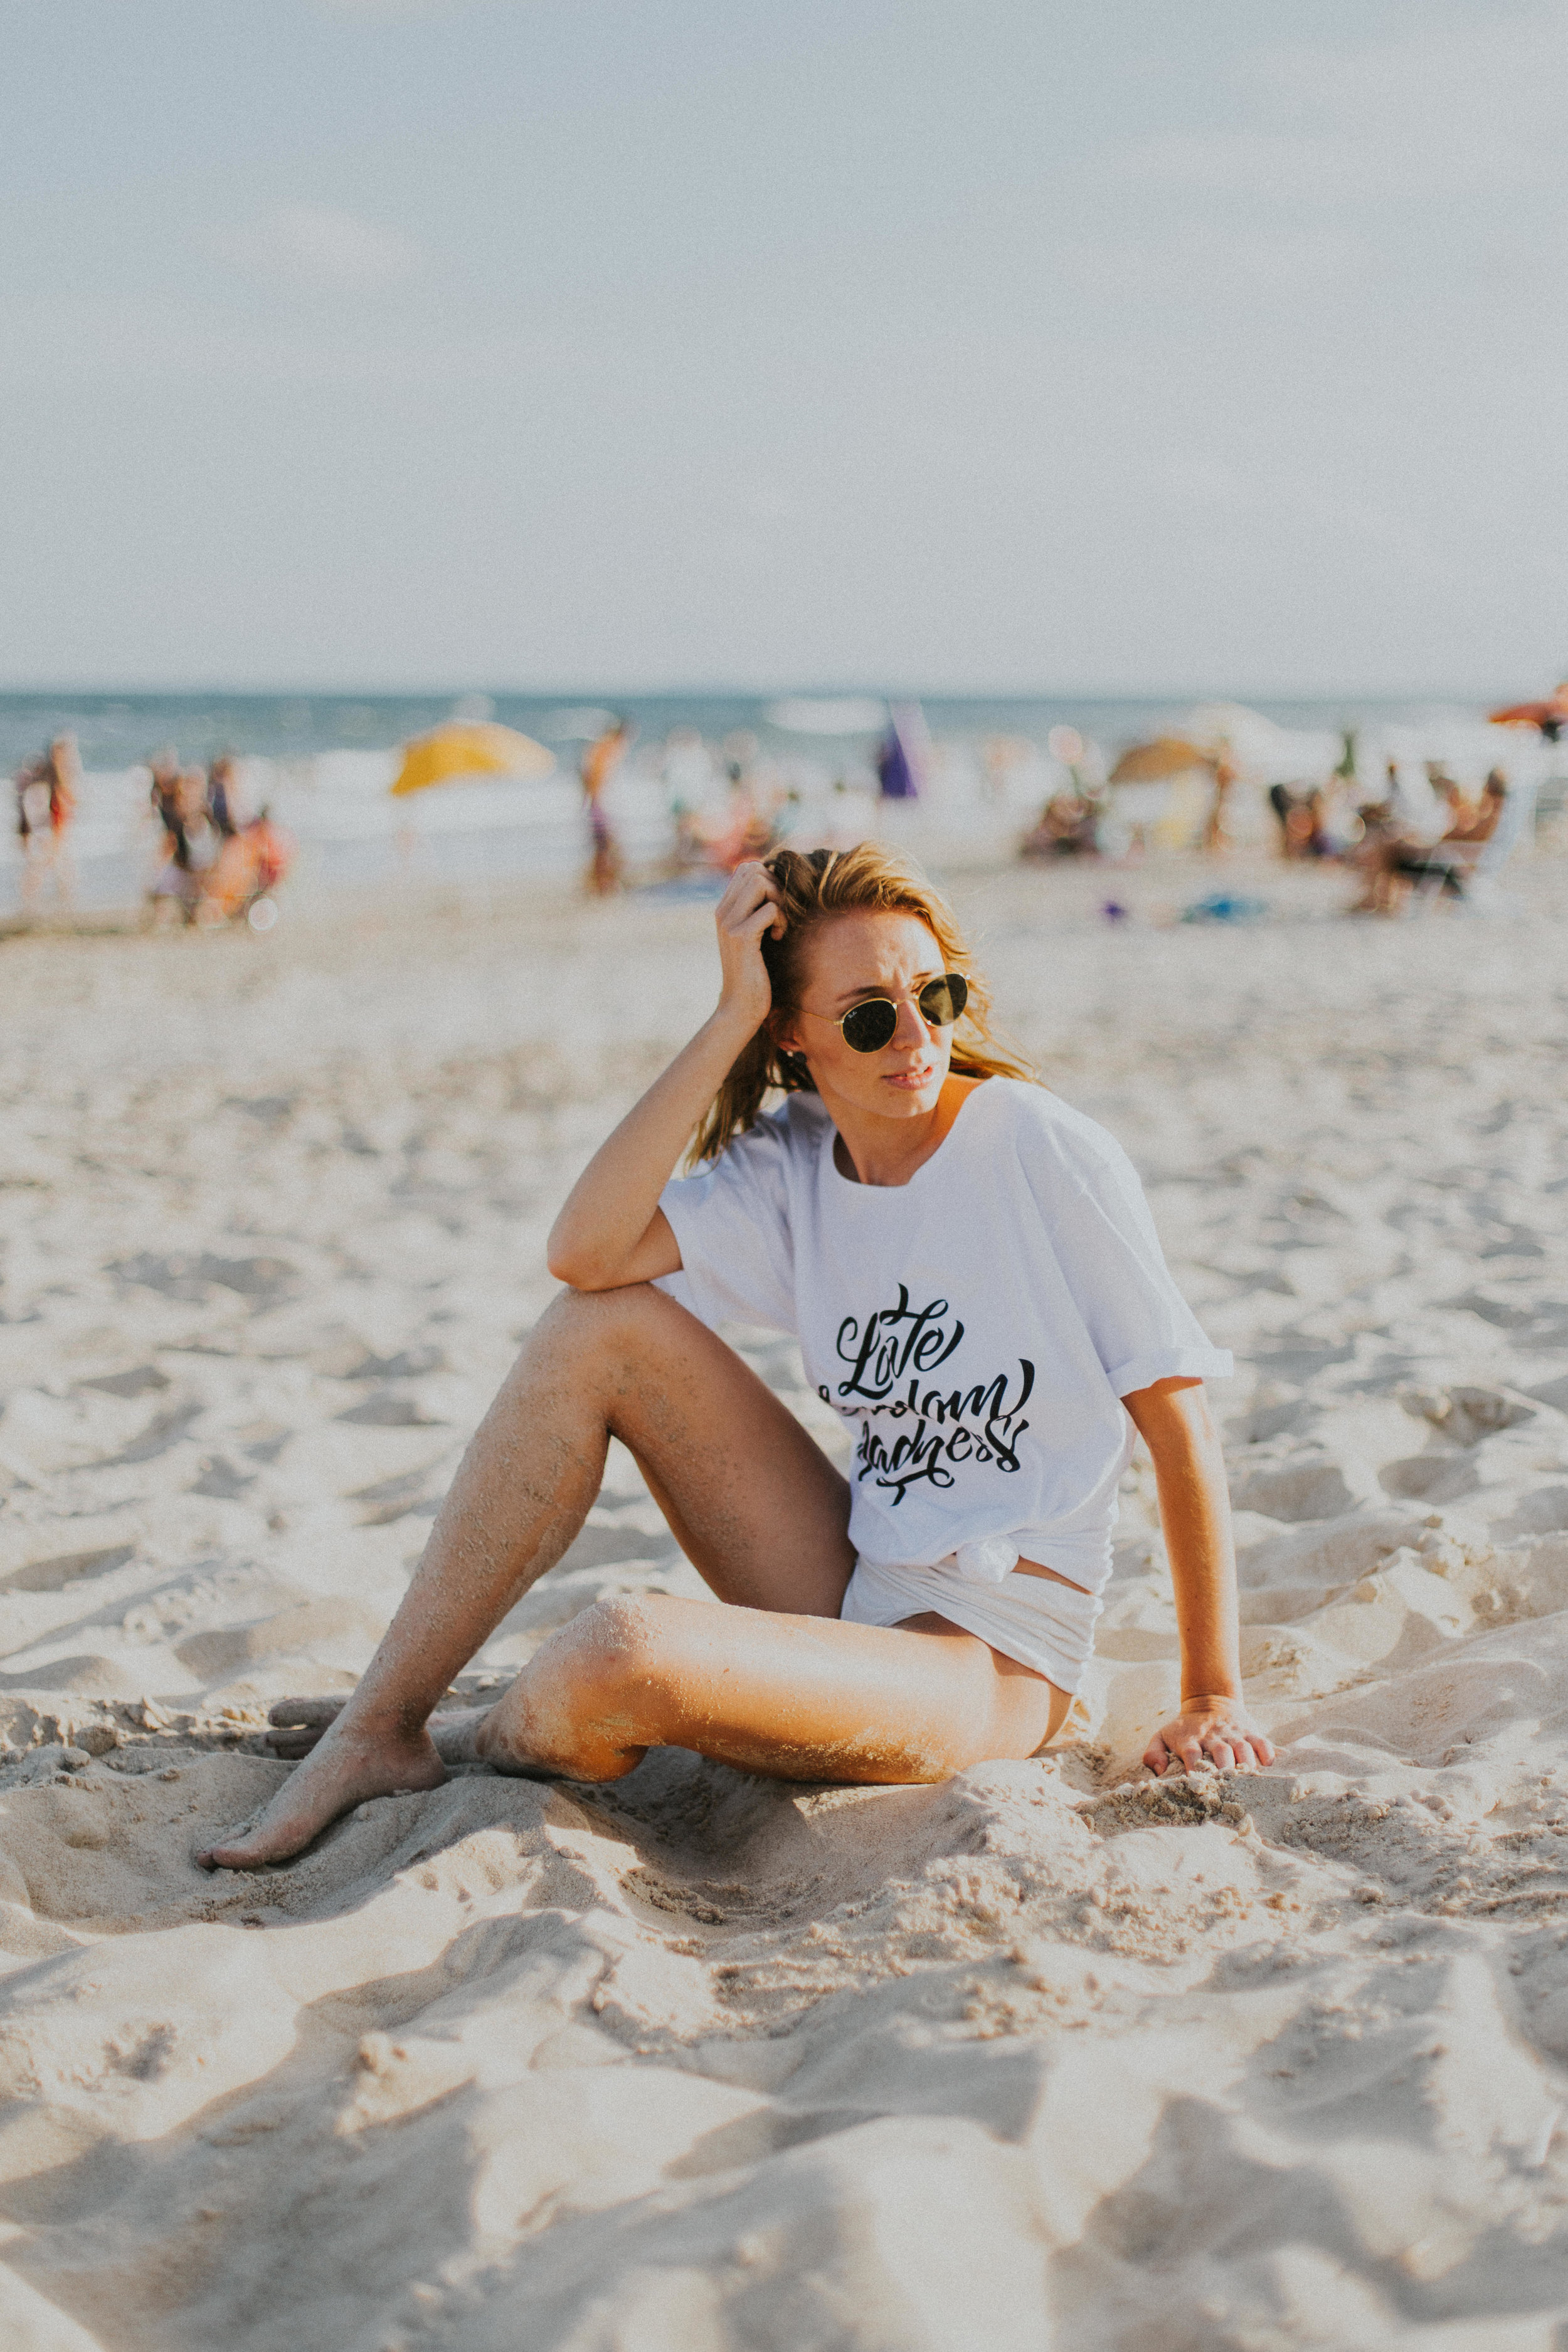 Gaby-Braun-Love-Freedom-Madness-Model-Brazil-t-shirt-beach-praia-ensaio-campanha-fotos-na-praia-ricardo-franzen-6.jpg